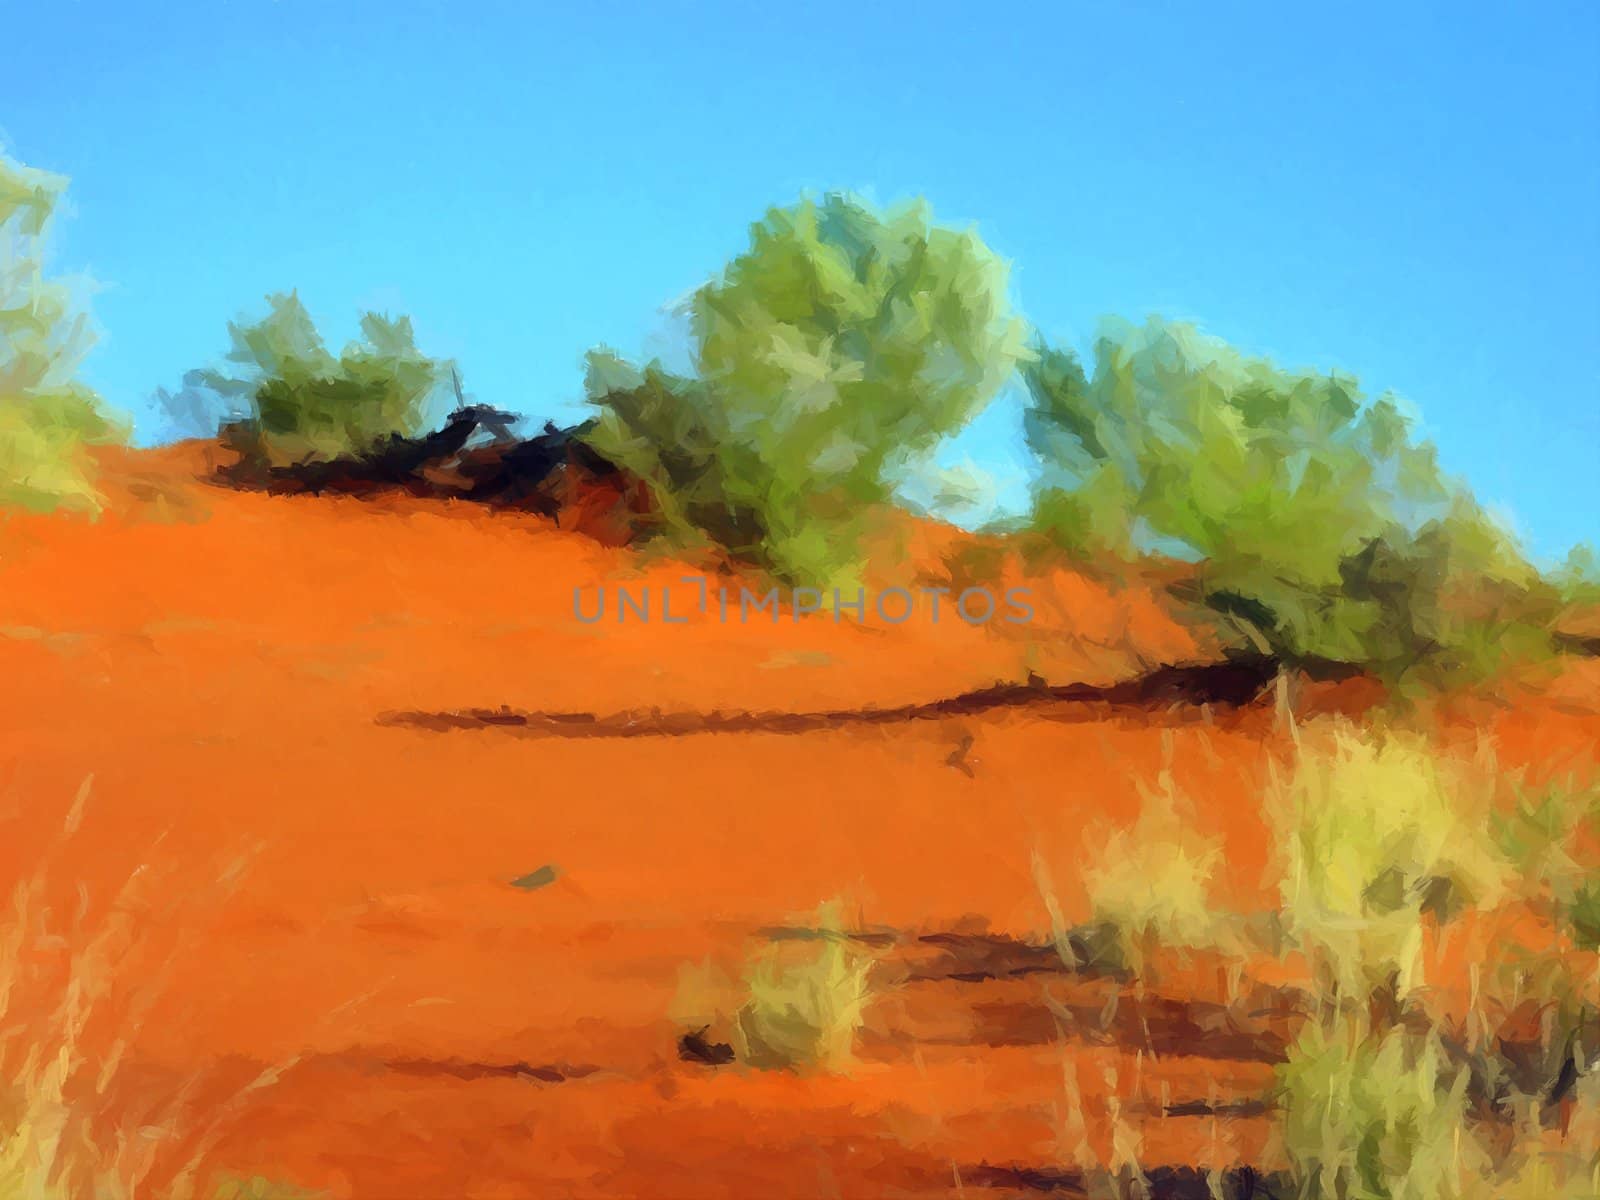 Red sand dune in the harsh outback Australia